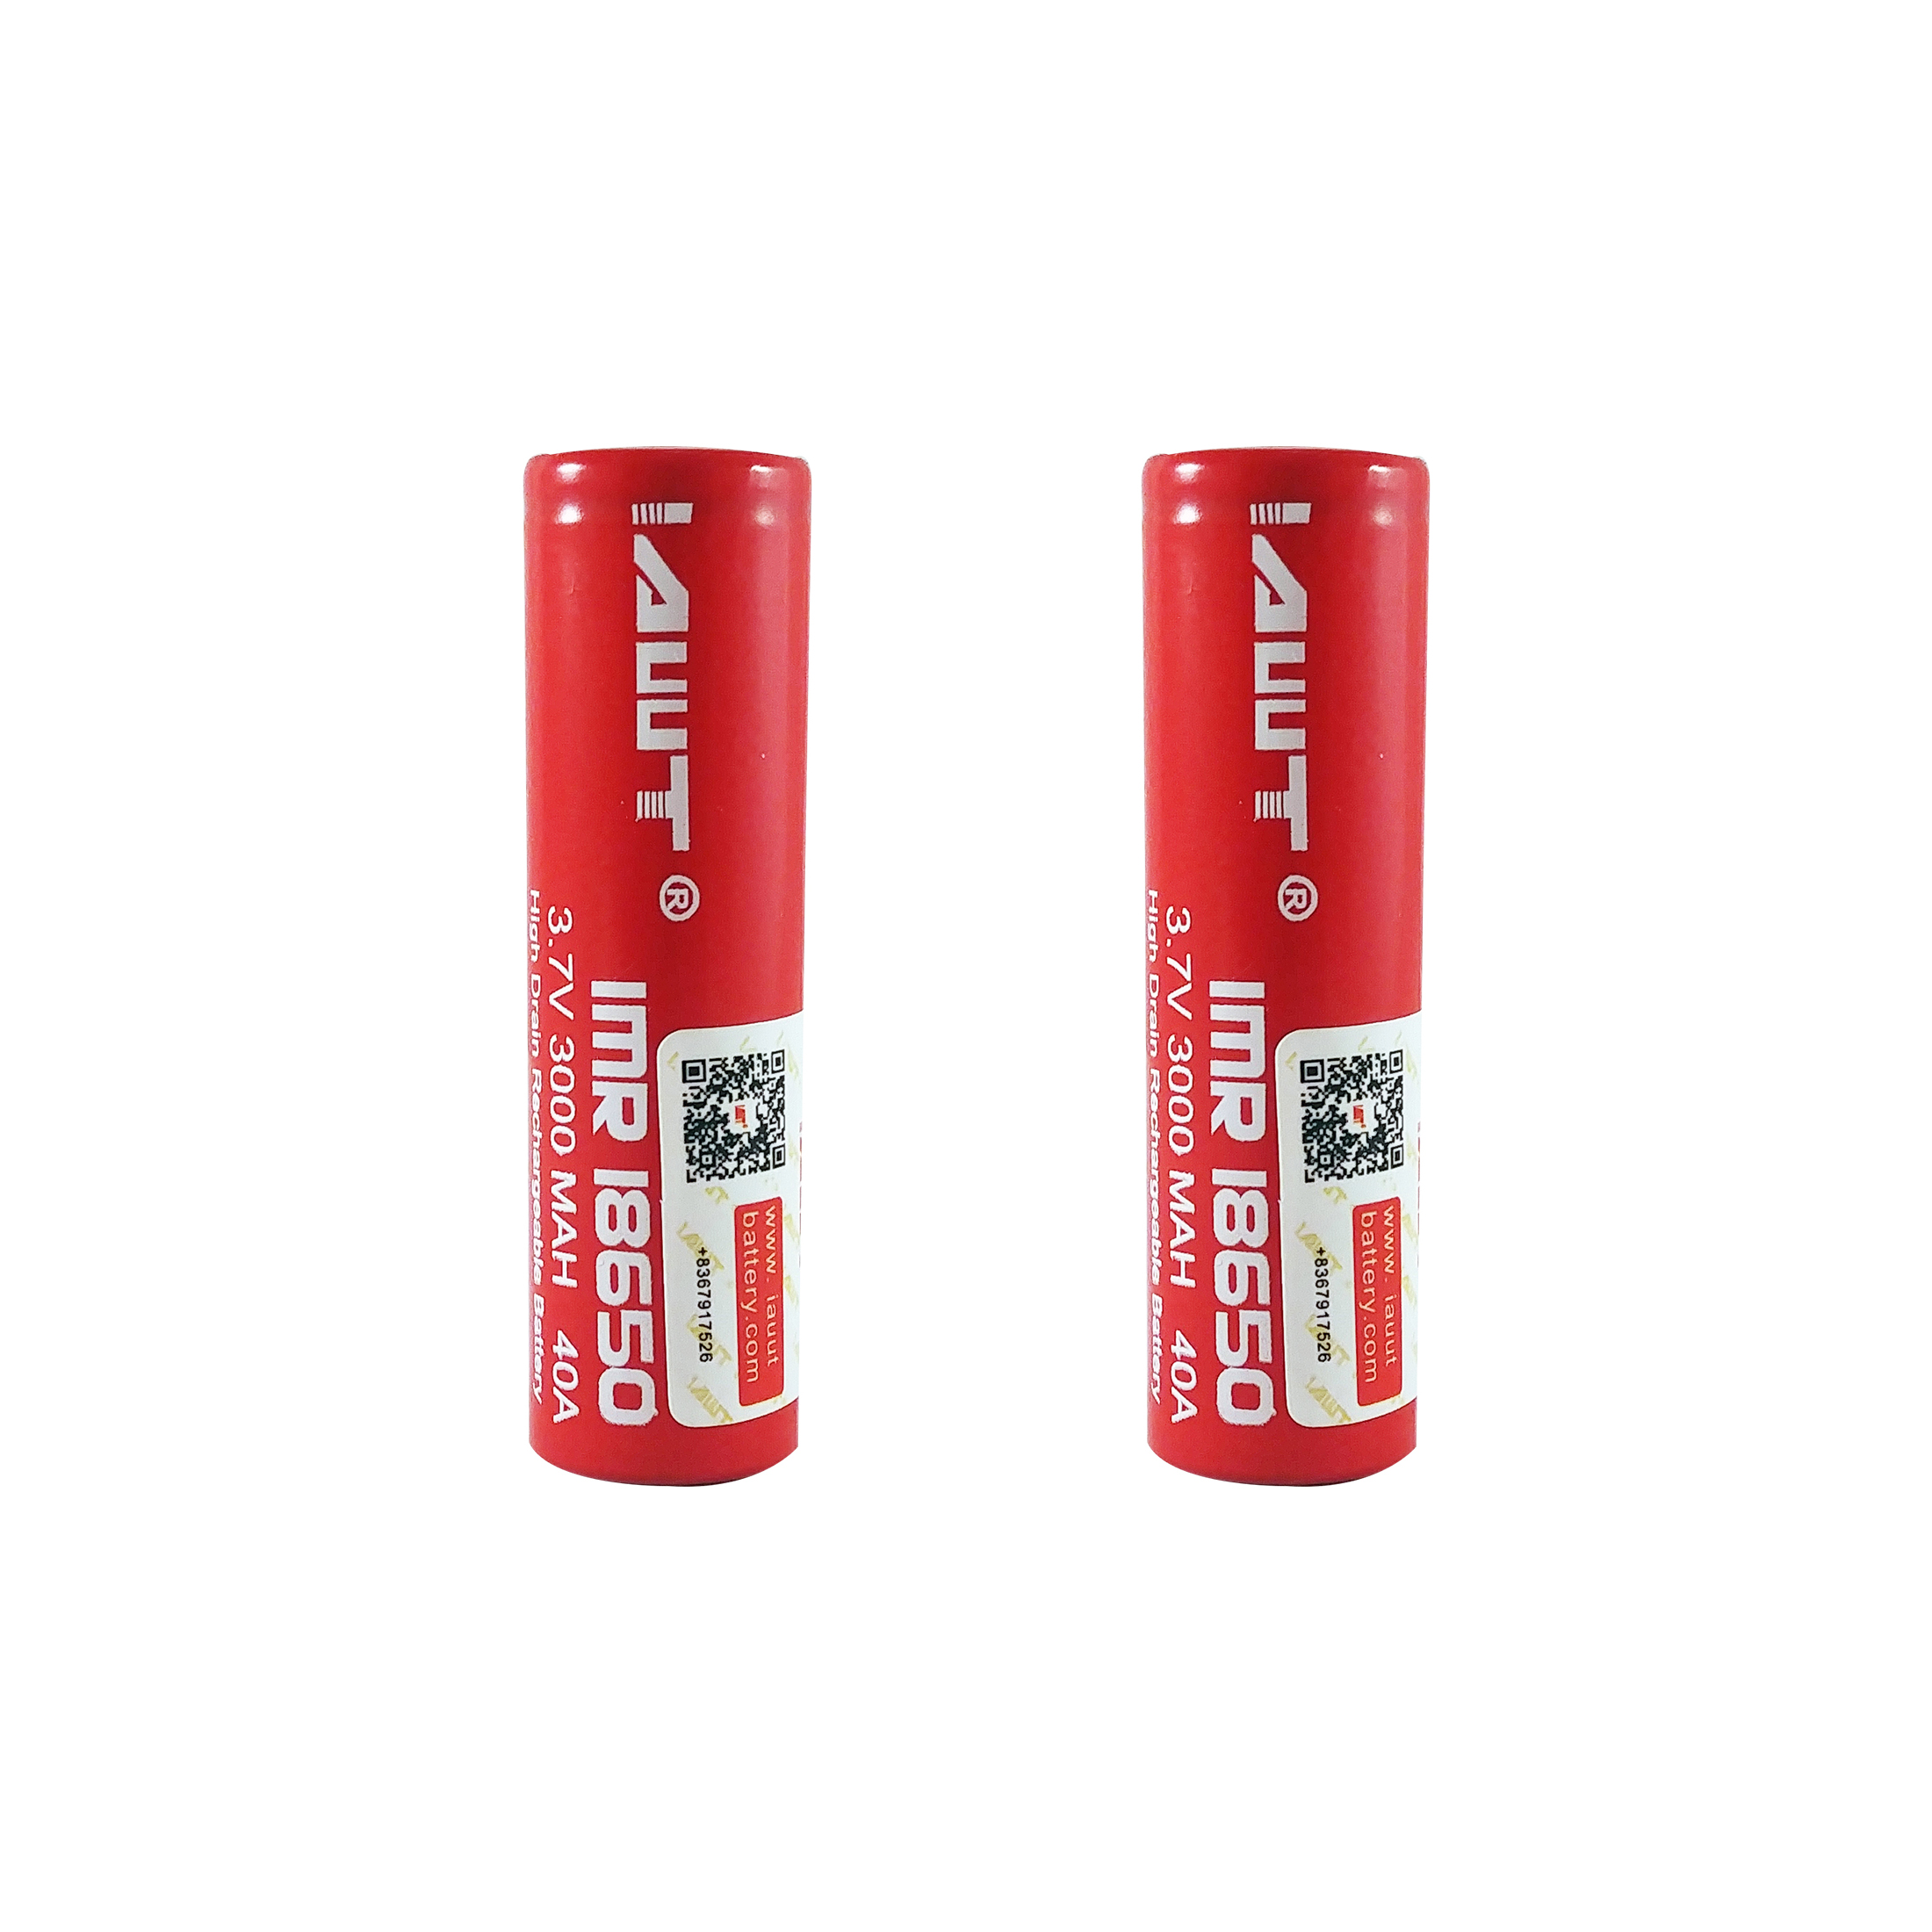 باتری لیتیوم-یون قابل شارژ ای دبلیو تی کد IMR-18650 بسته 2 عددی